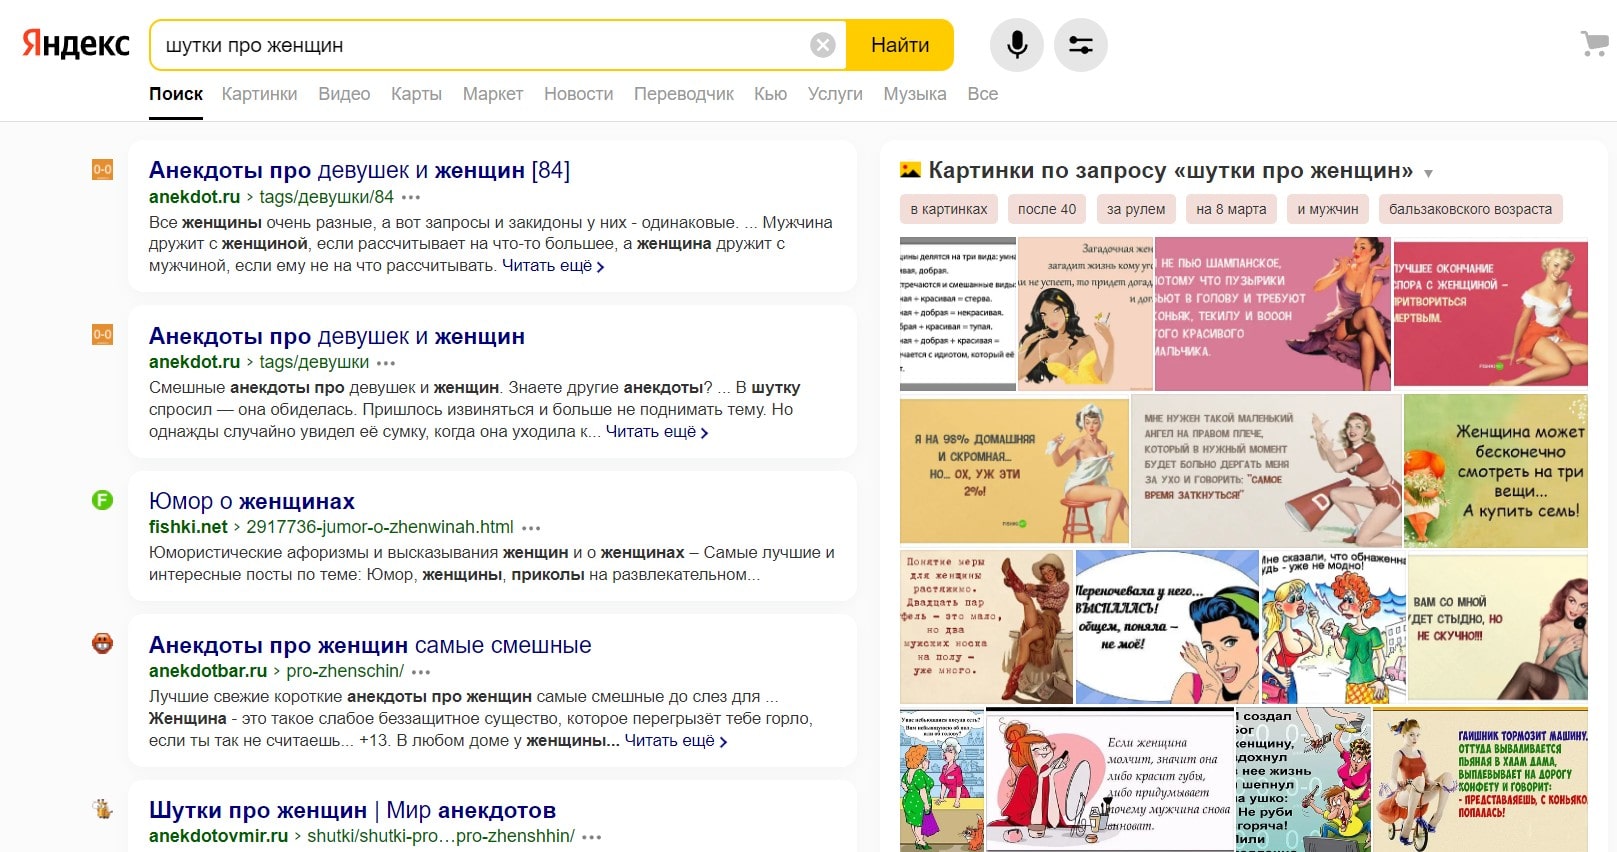 шутки про женщин в Яндексе